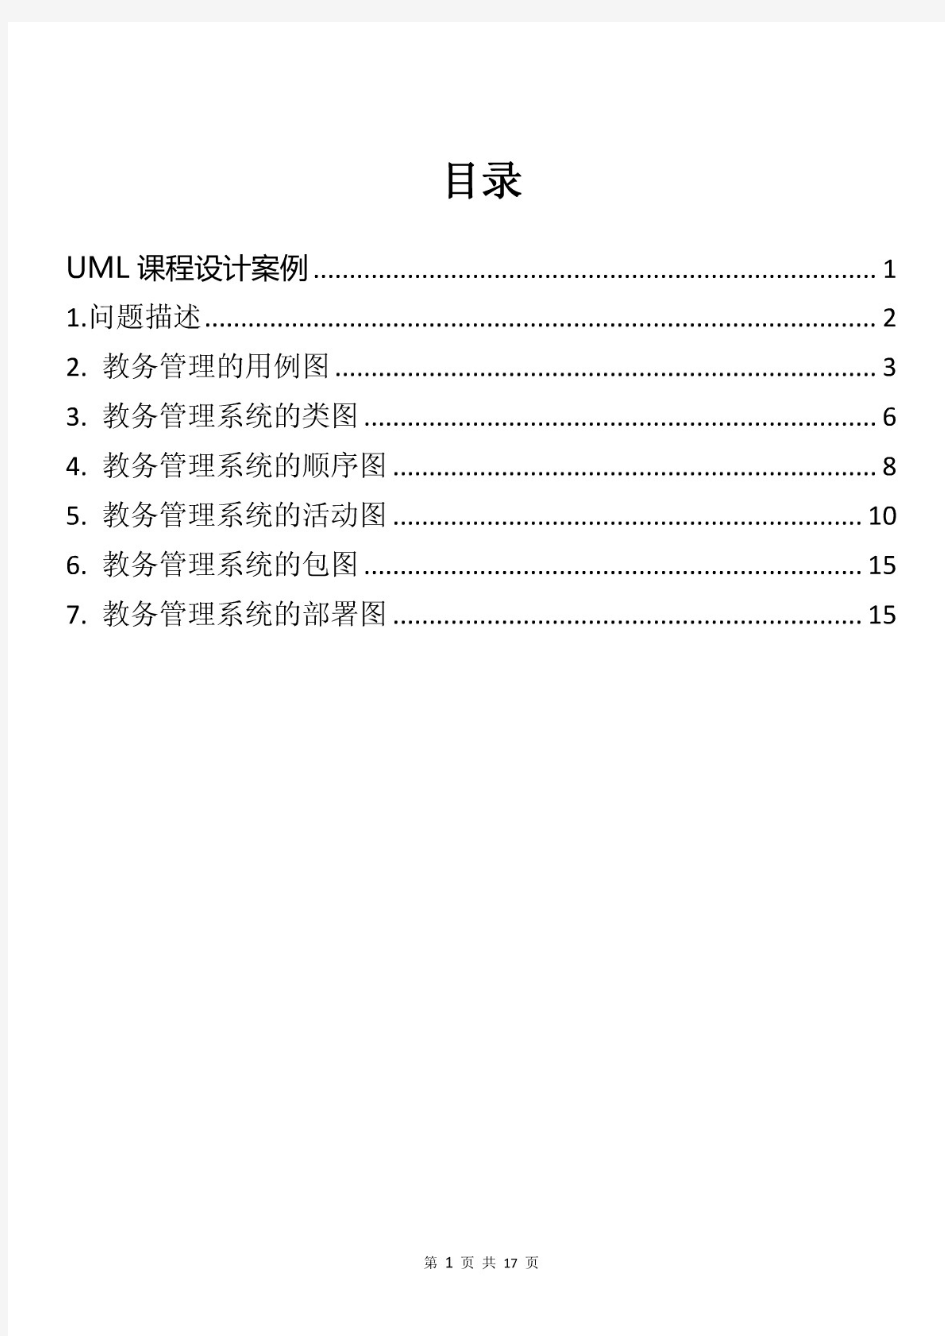 UML期末大作业-教务信息管理系统